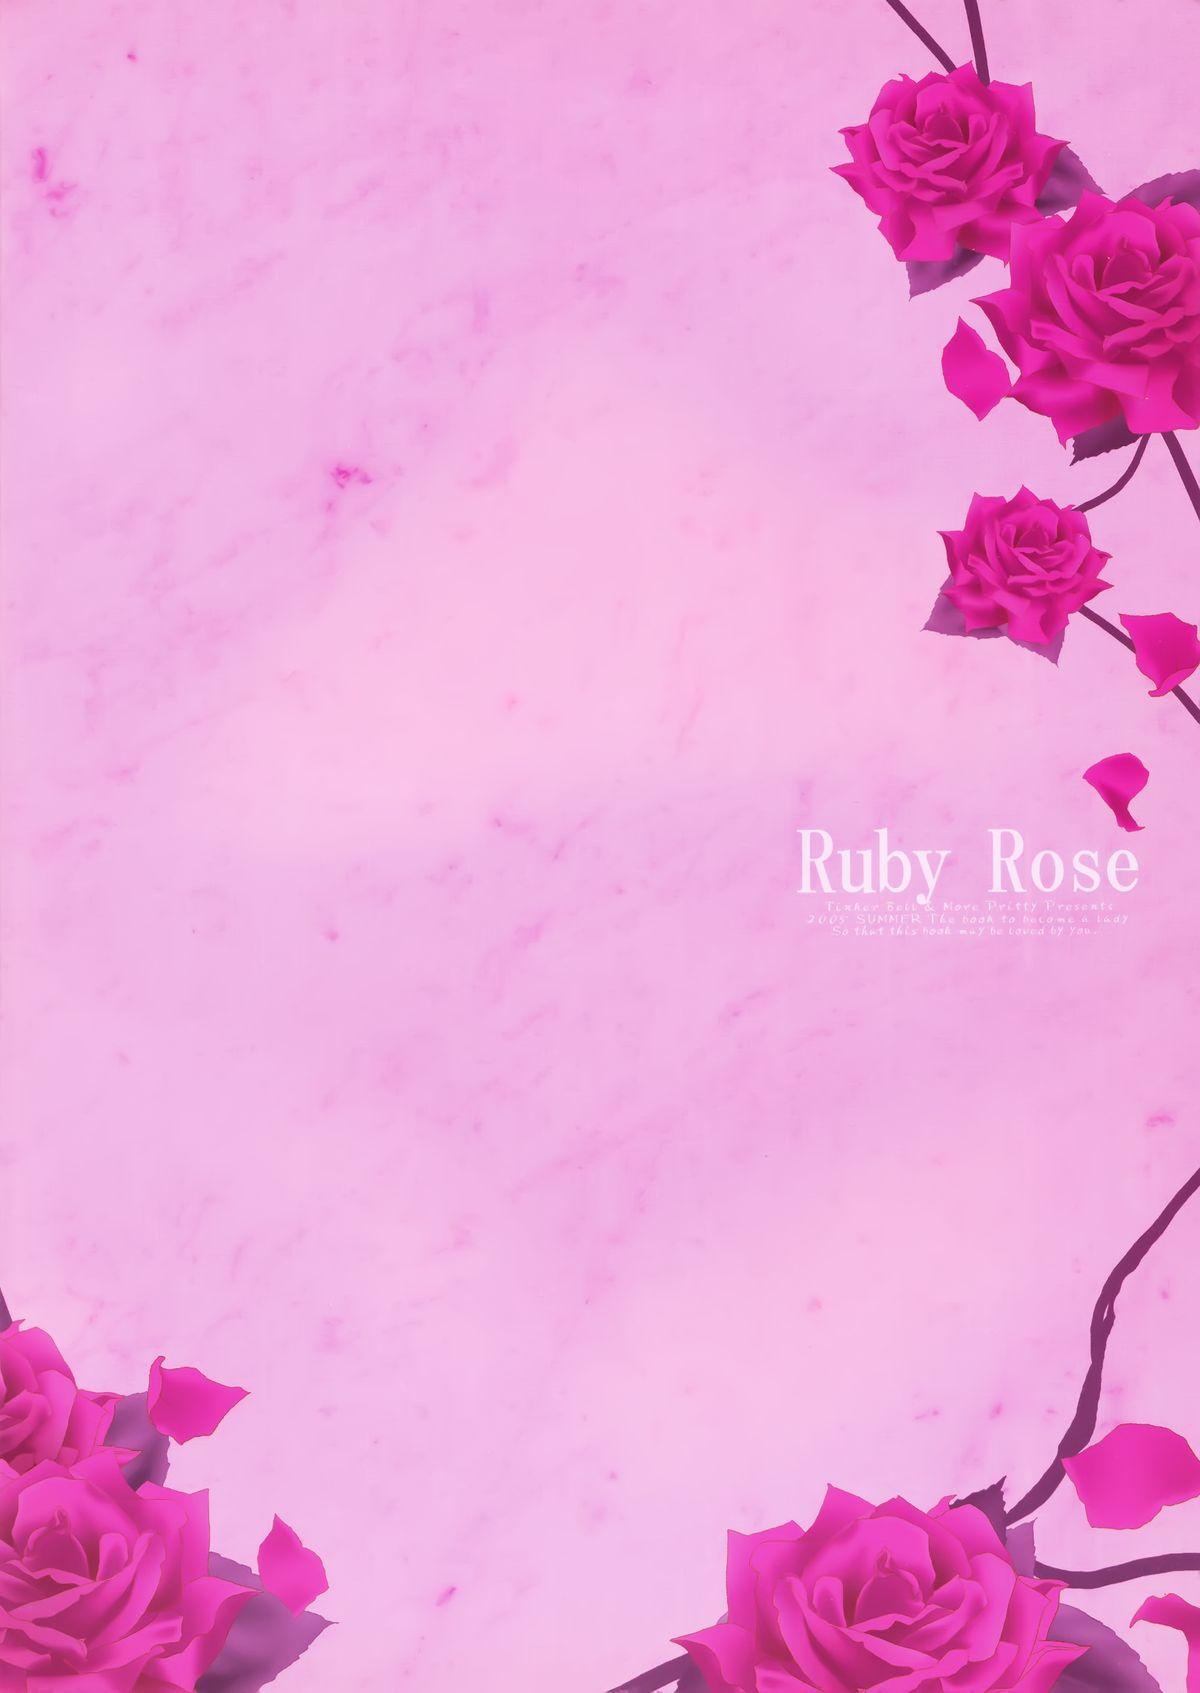 Ruby Rose 29